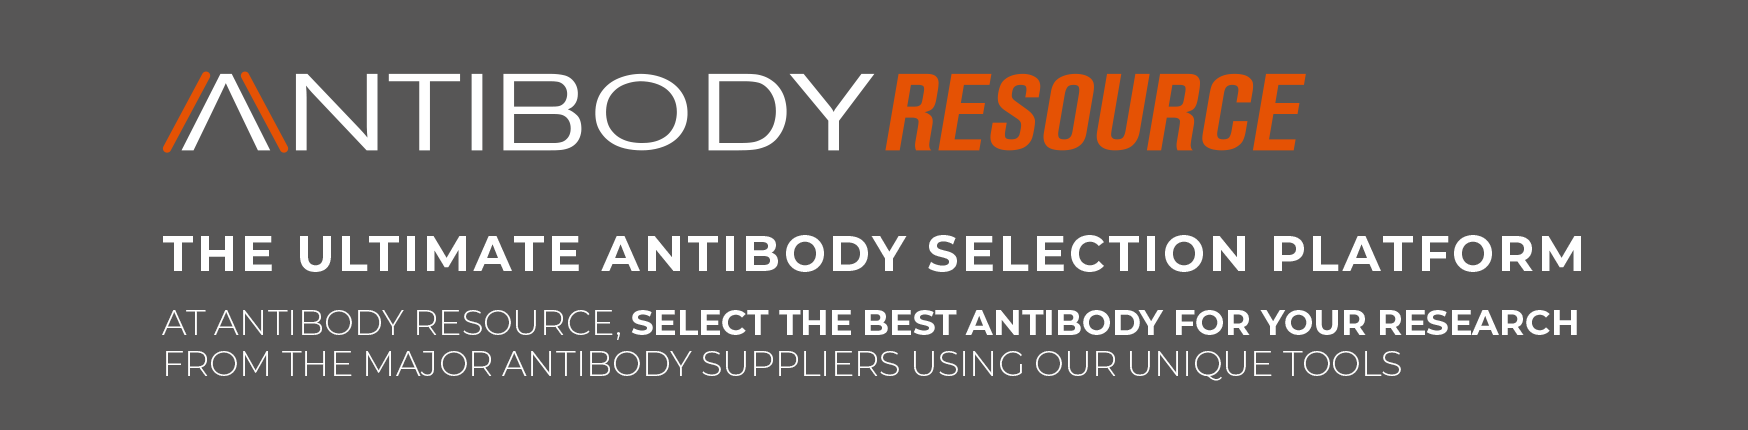 Antibody Resource